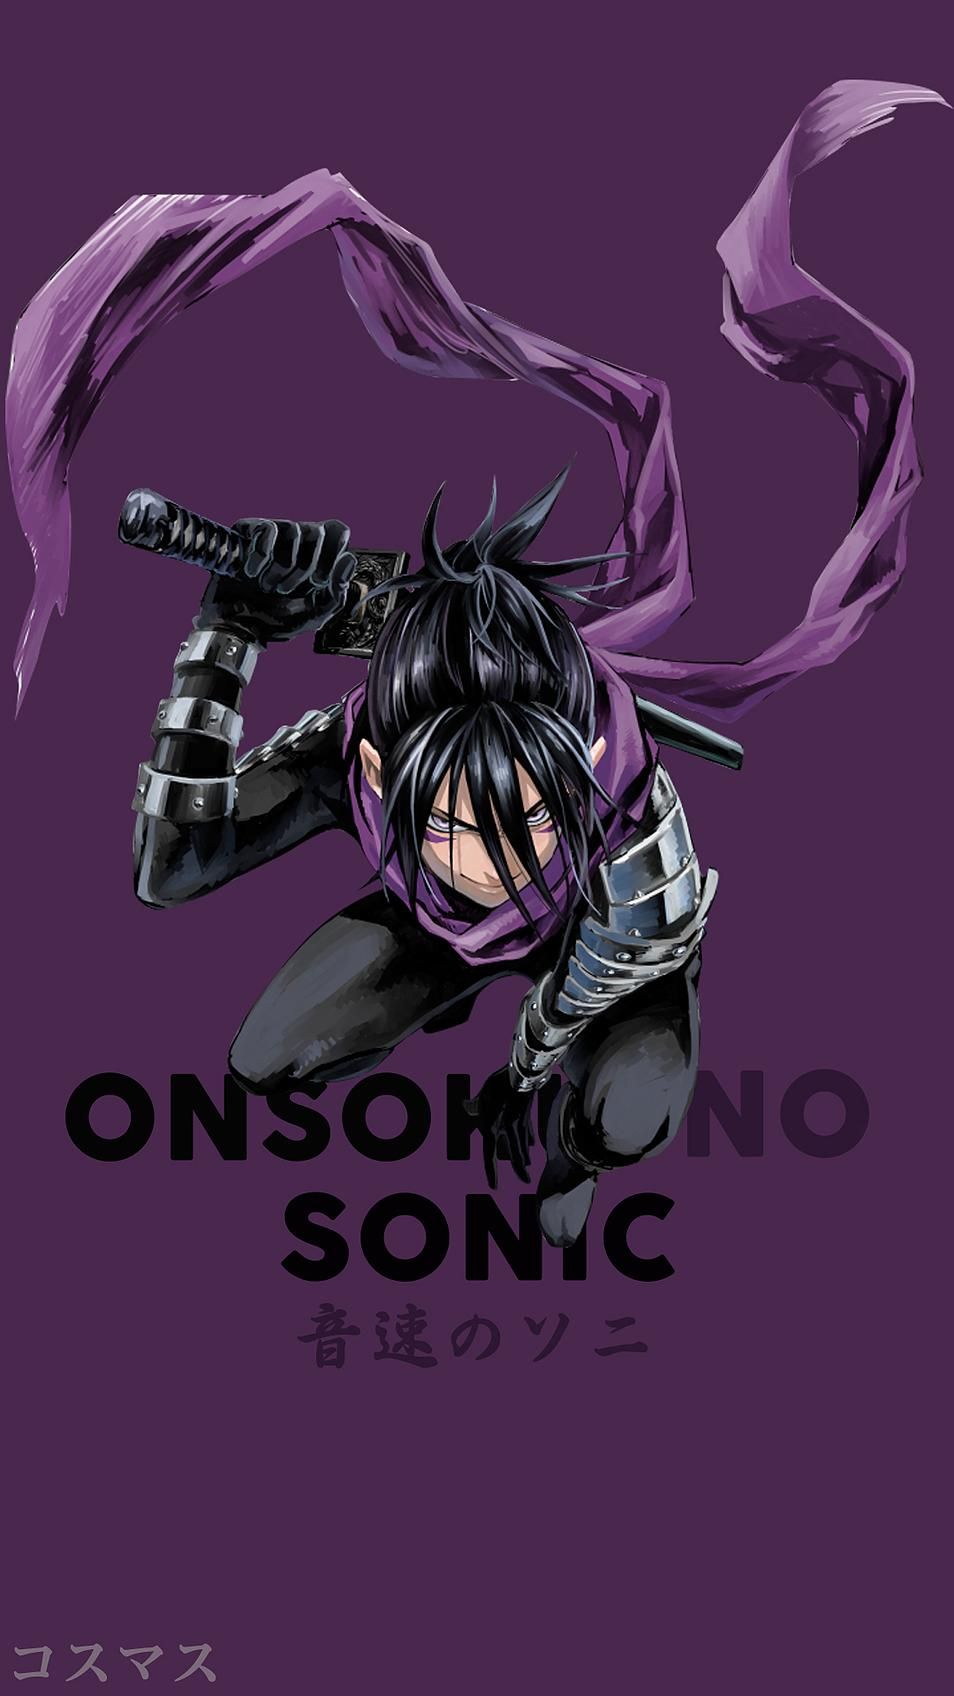 Onsoku no Sonic Korigengi. Wallpaper Anime. One punch man sonic, One punch man, One punch man anime